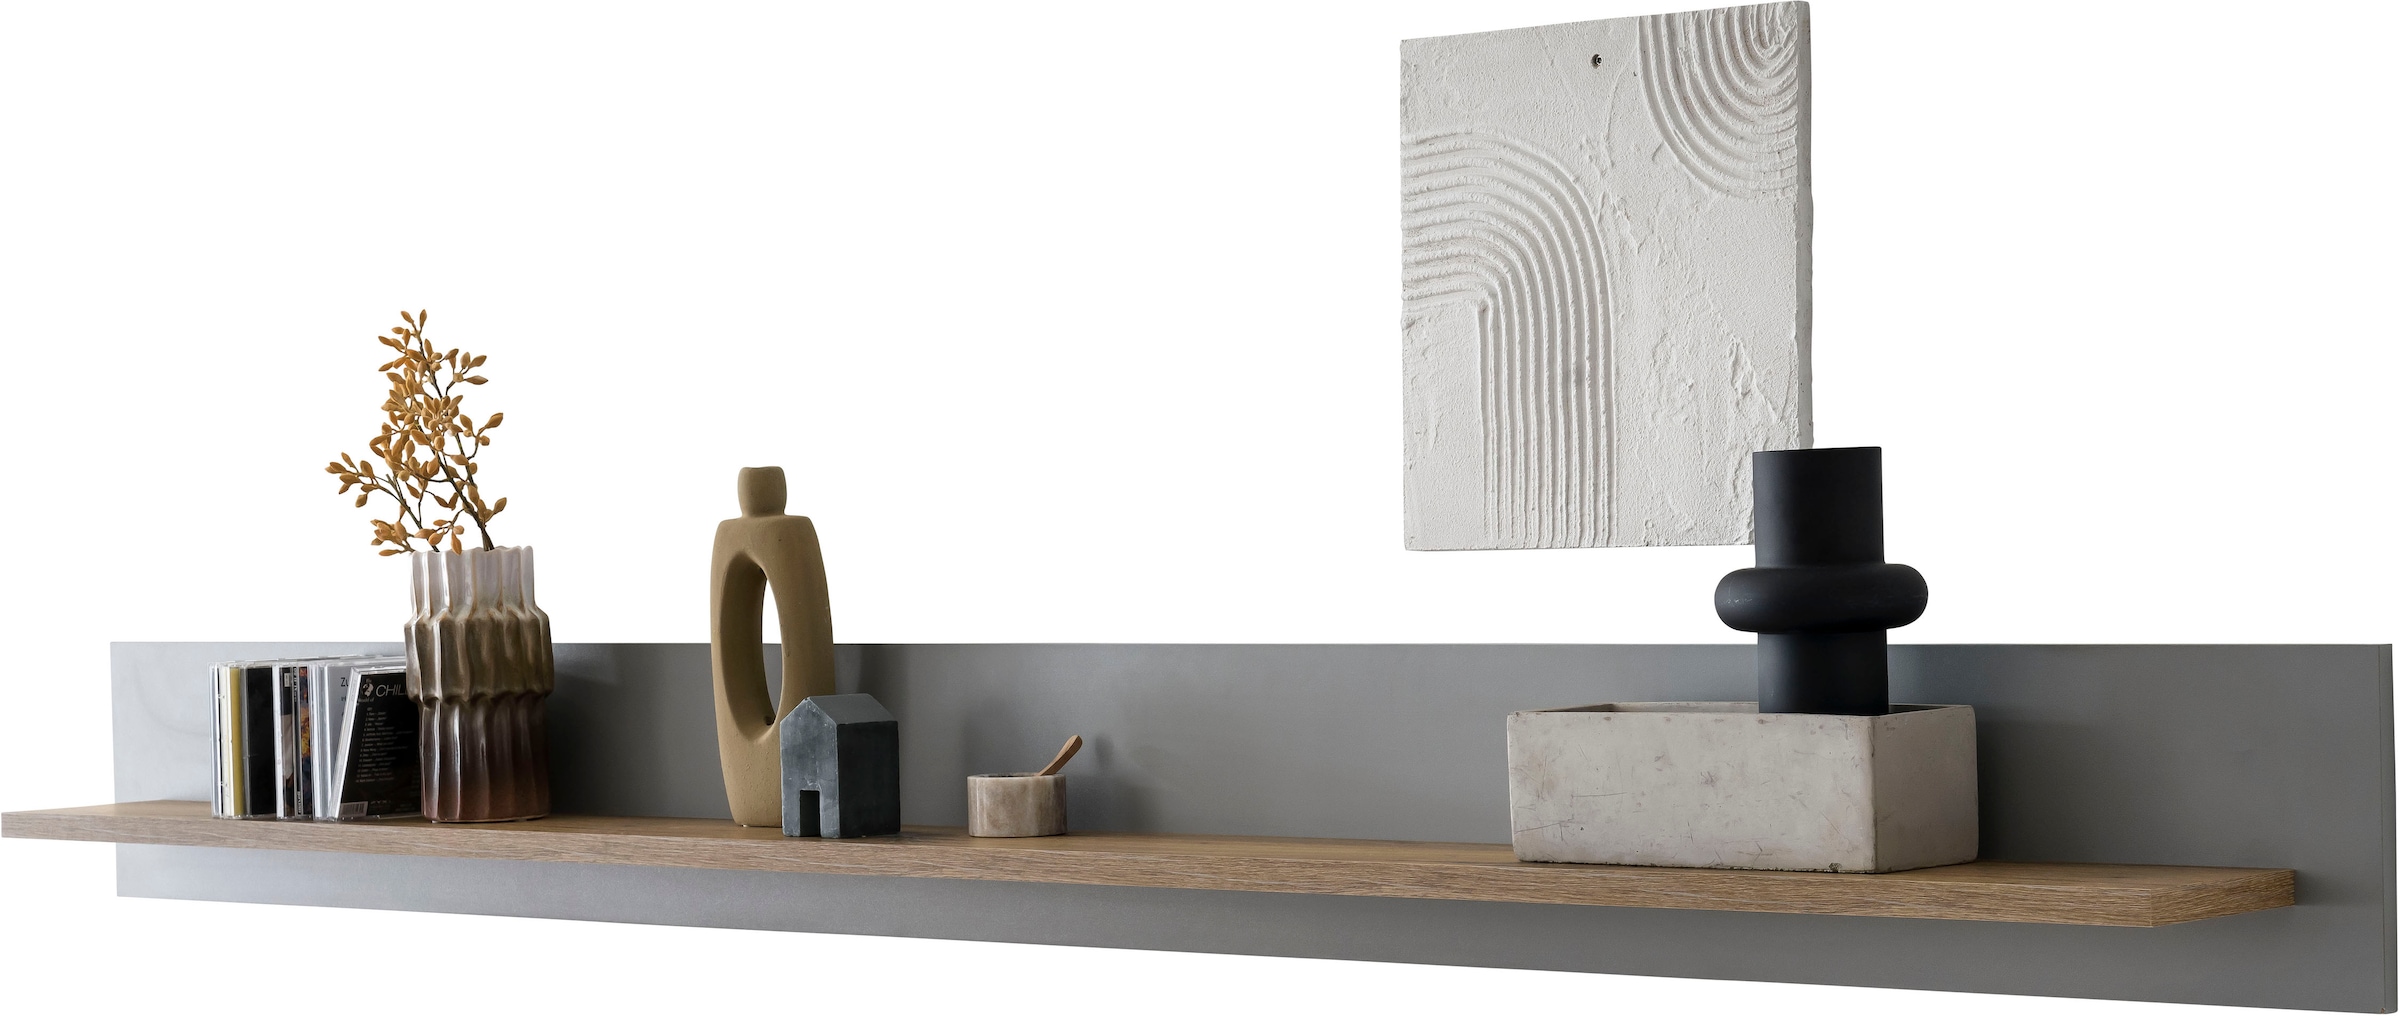 INOSIGN Wandregal »CASABLANCA«, Modernes Design in trendiger Farbe  Platingrau Matt, Breite 217 cm bequem kaufen